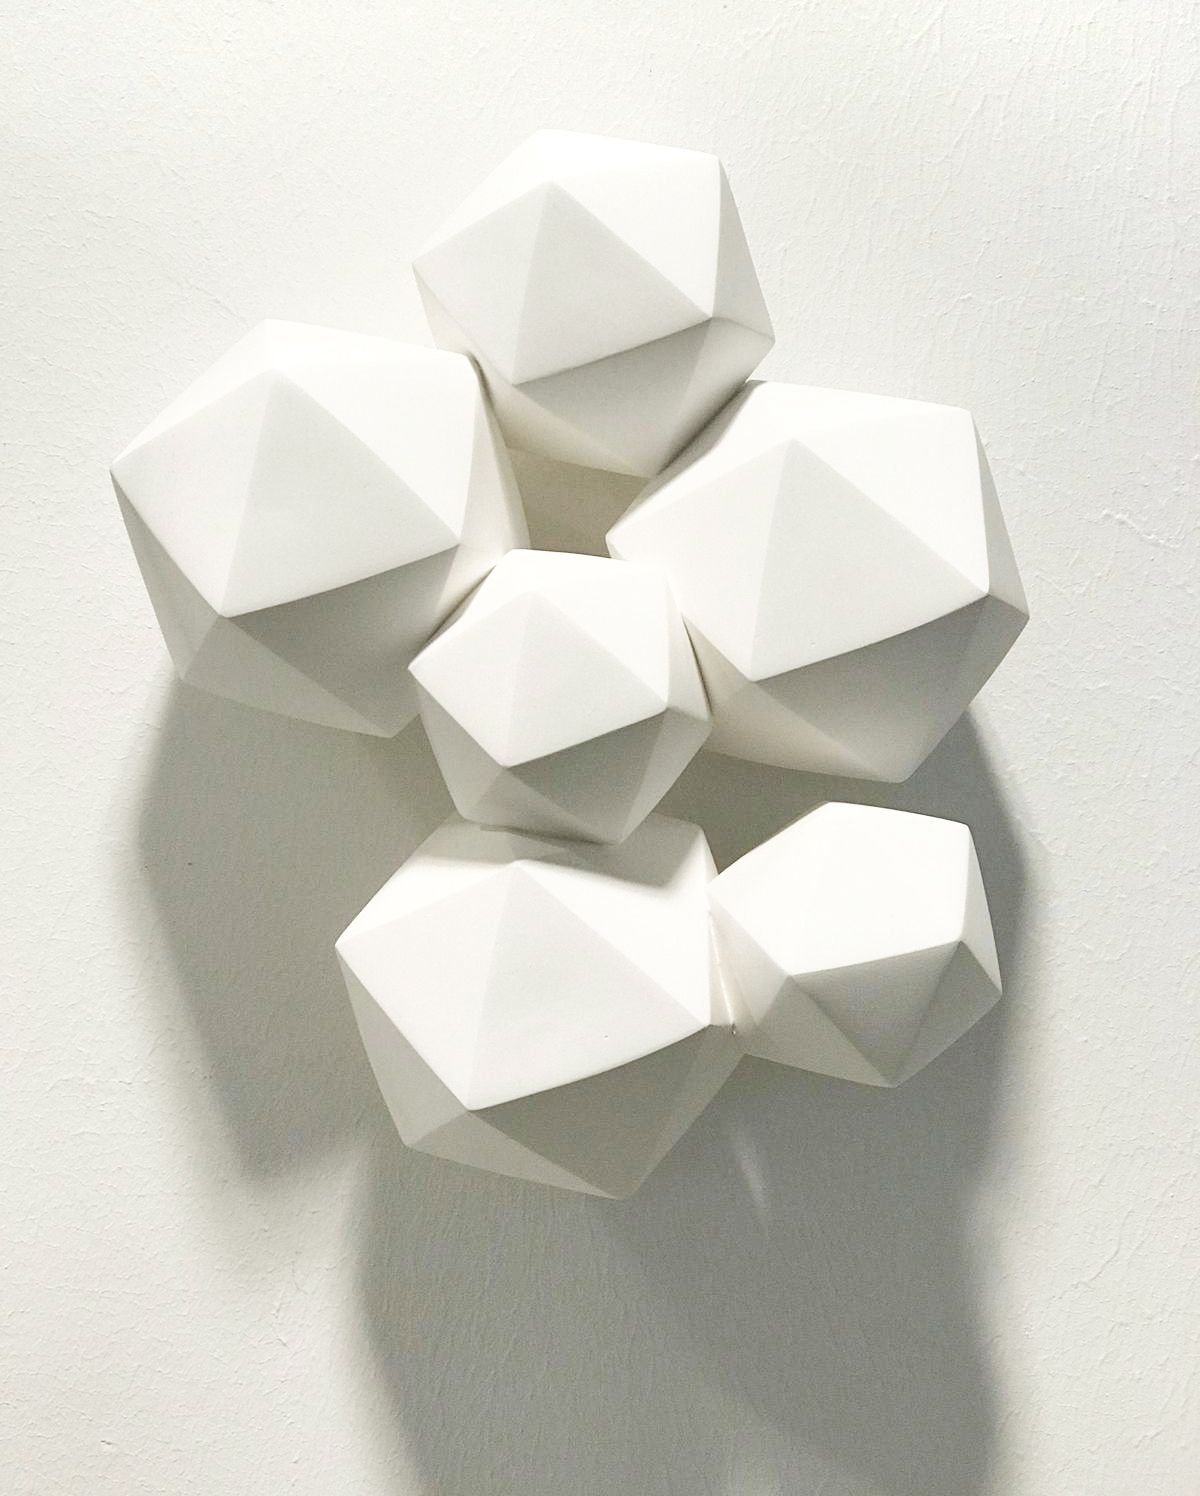 Kunst: Icosahedron van kunstenaar Mo Cornelisse